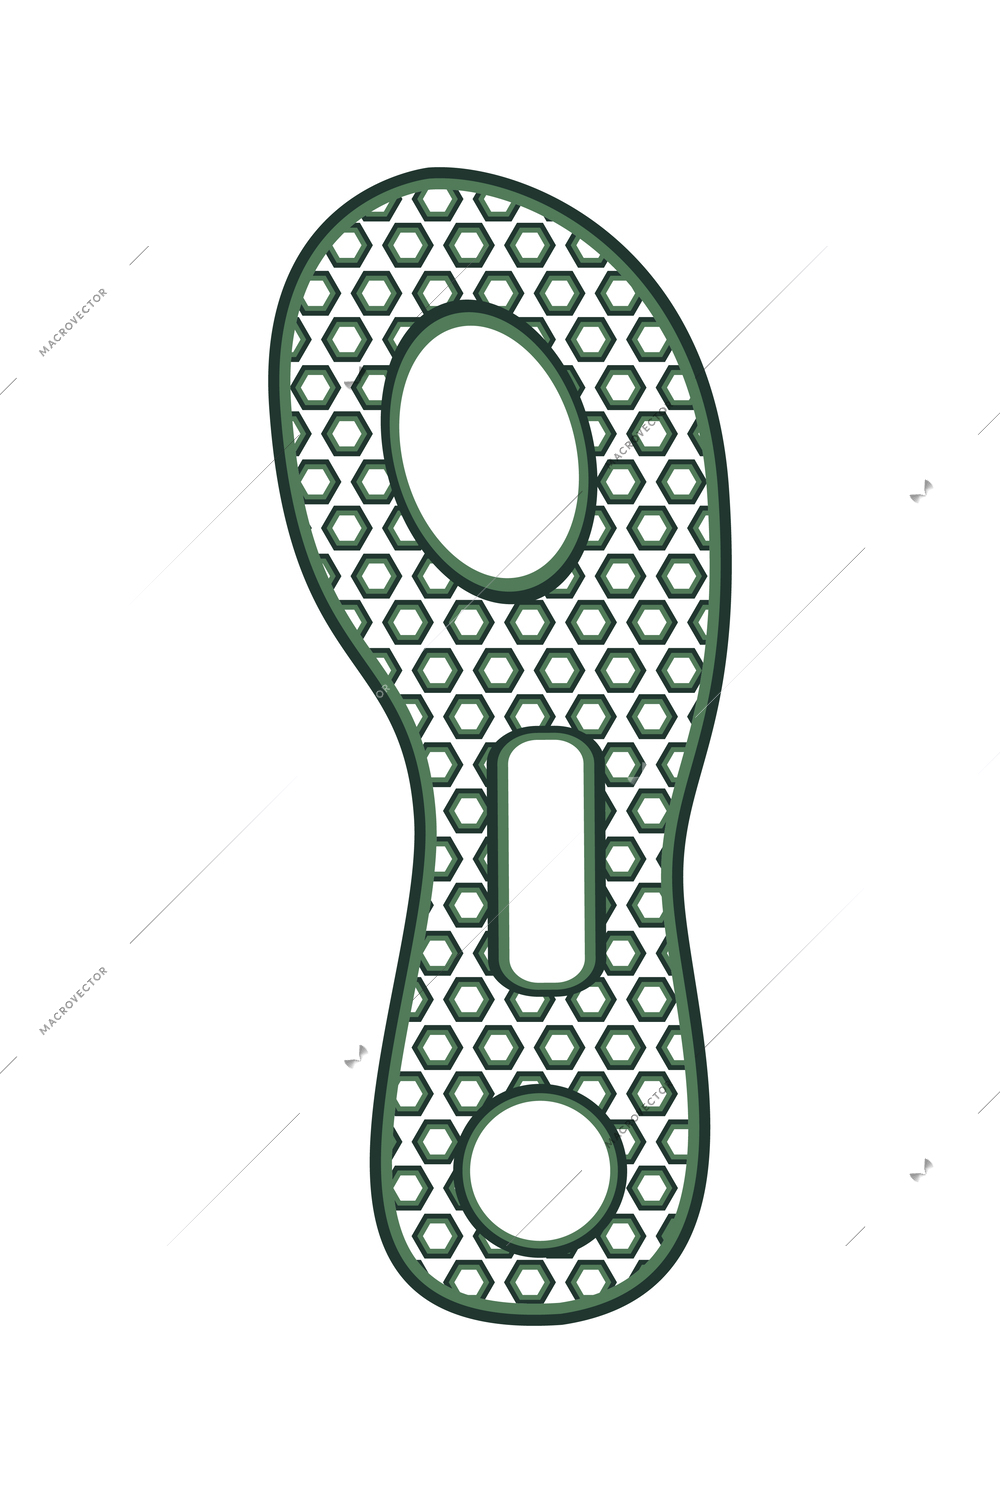 Green sport shoe sole foorprint pattern flat vector illustration